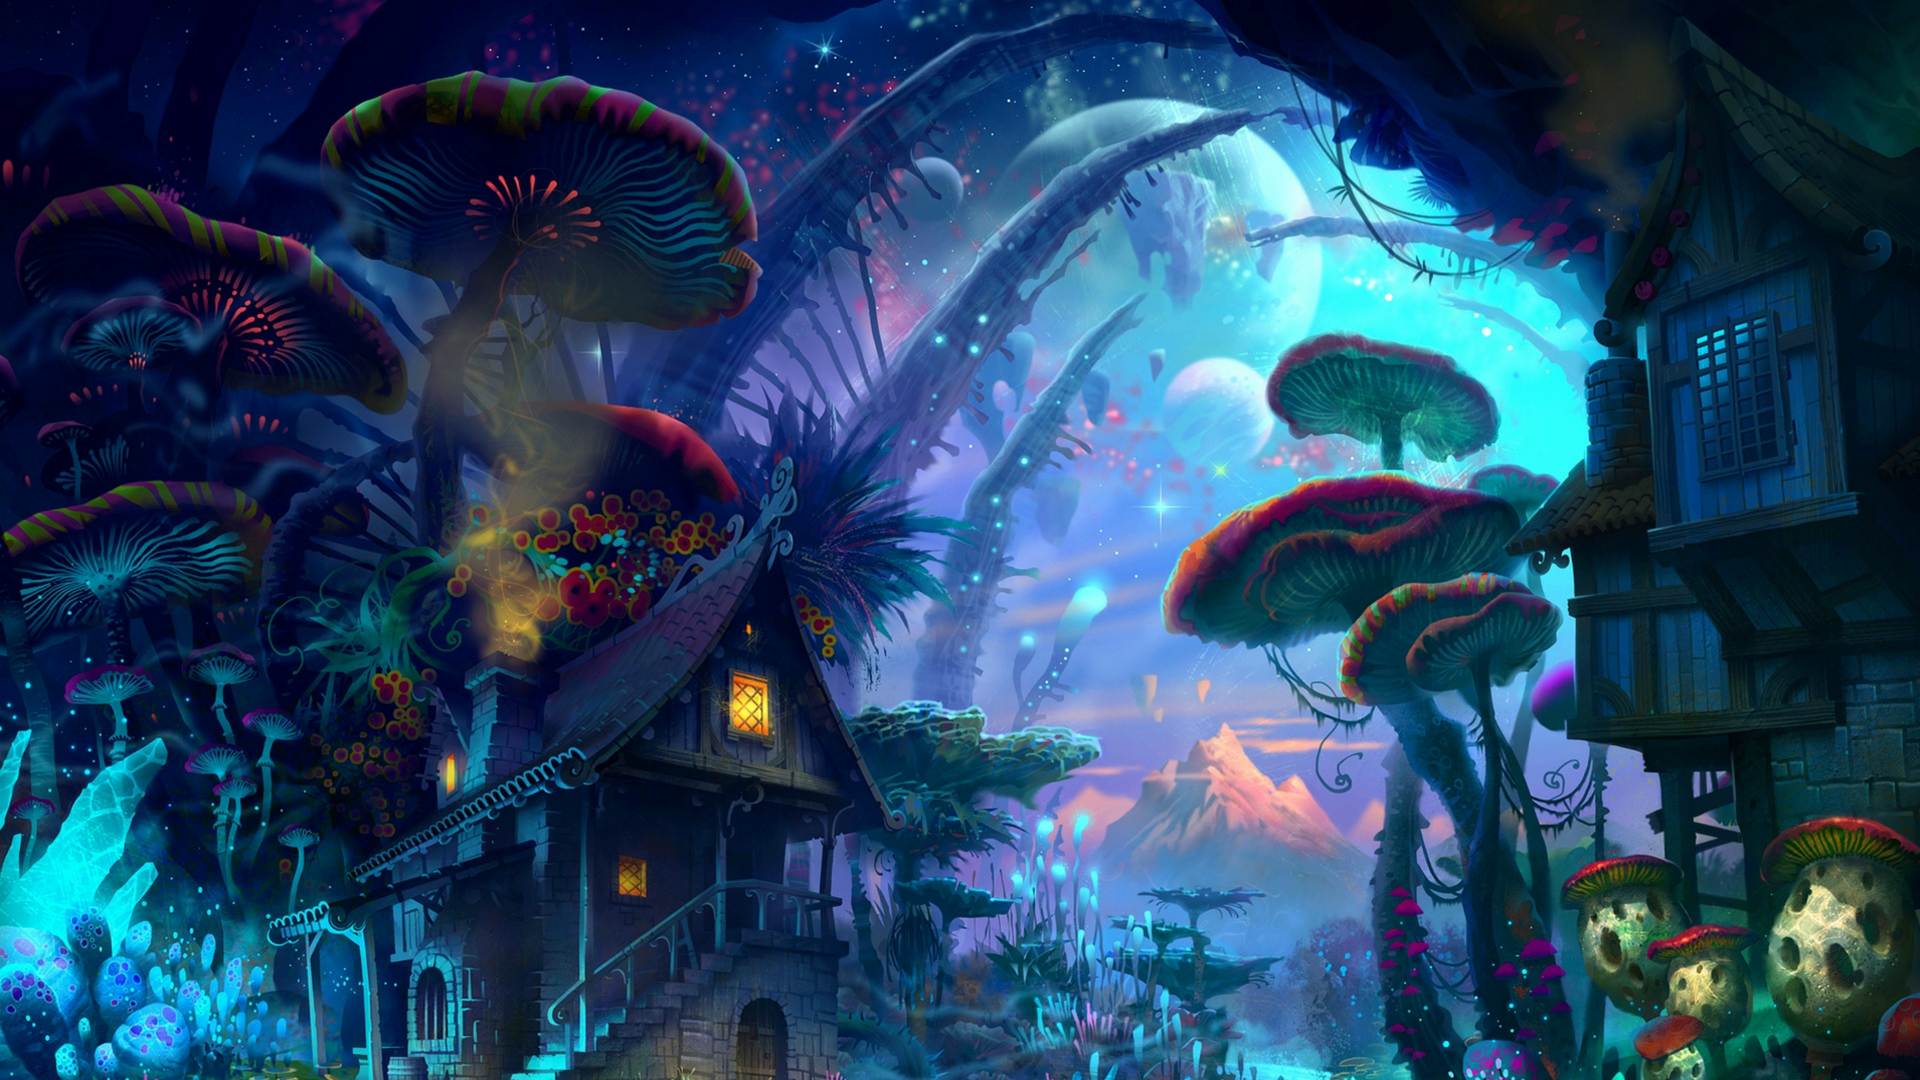 Anime 1920x1080 anime magic fantasy art plants house planet mushroom colorful cave